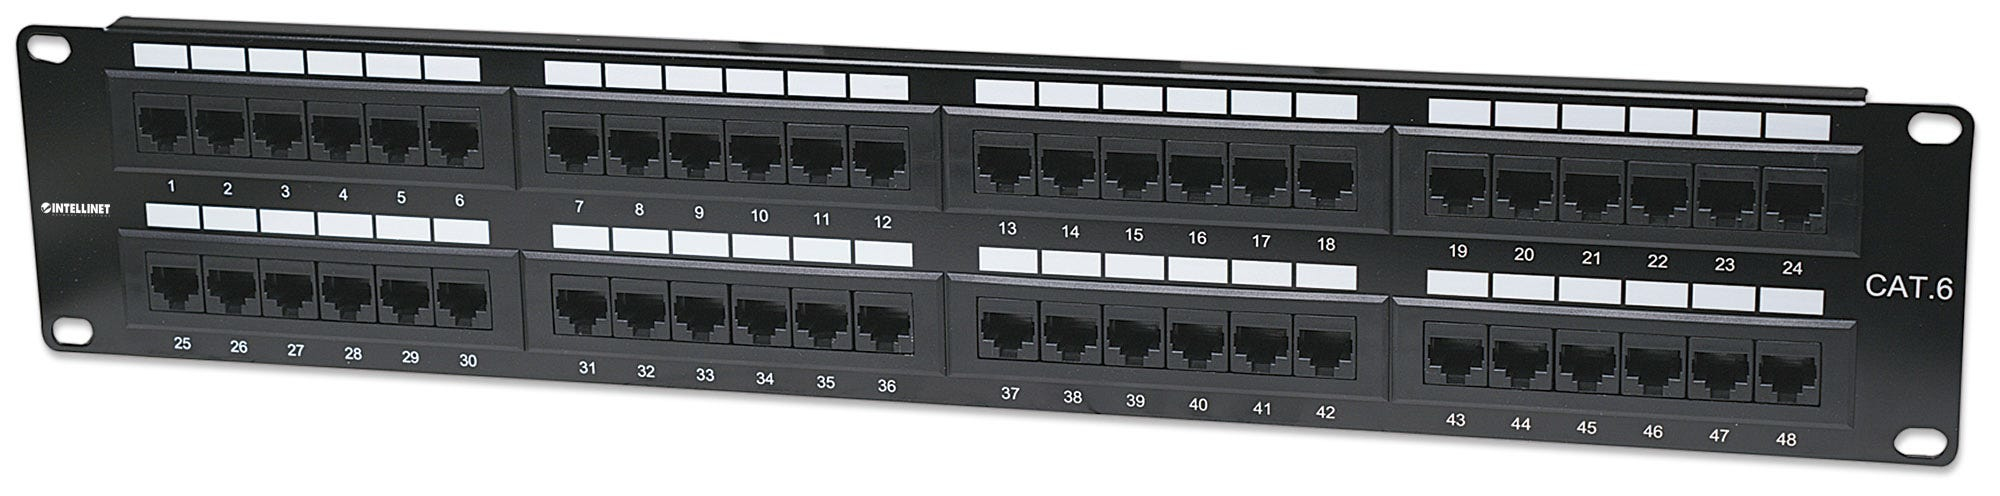 Panel Parcheo Intellinet Cat-6, 48 Ptos 2 Niv. Rack 560283